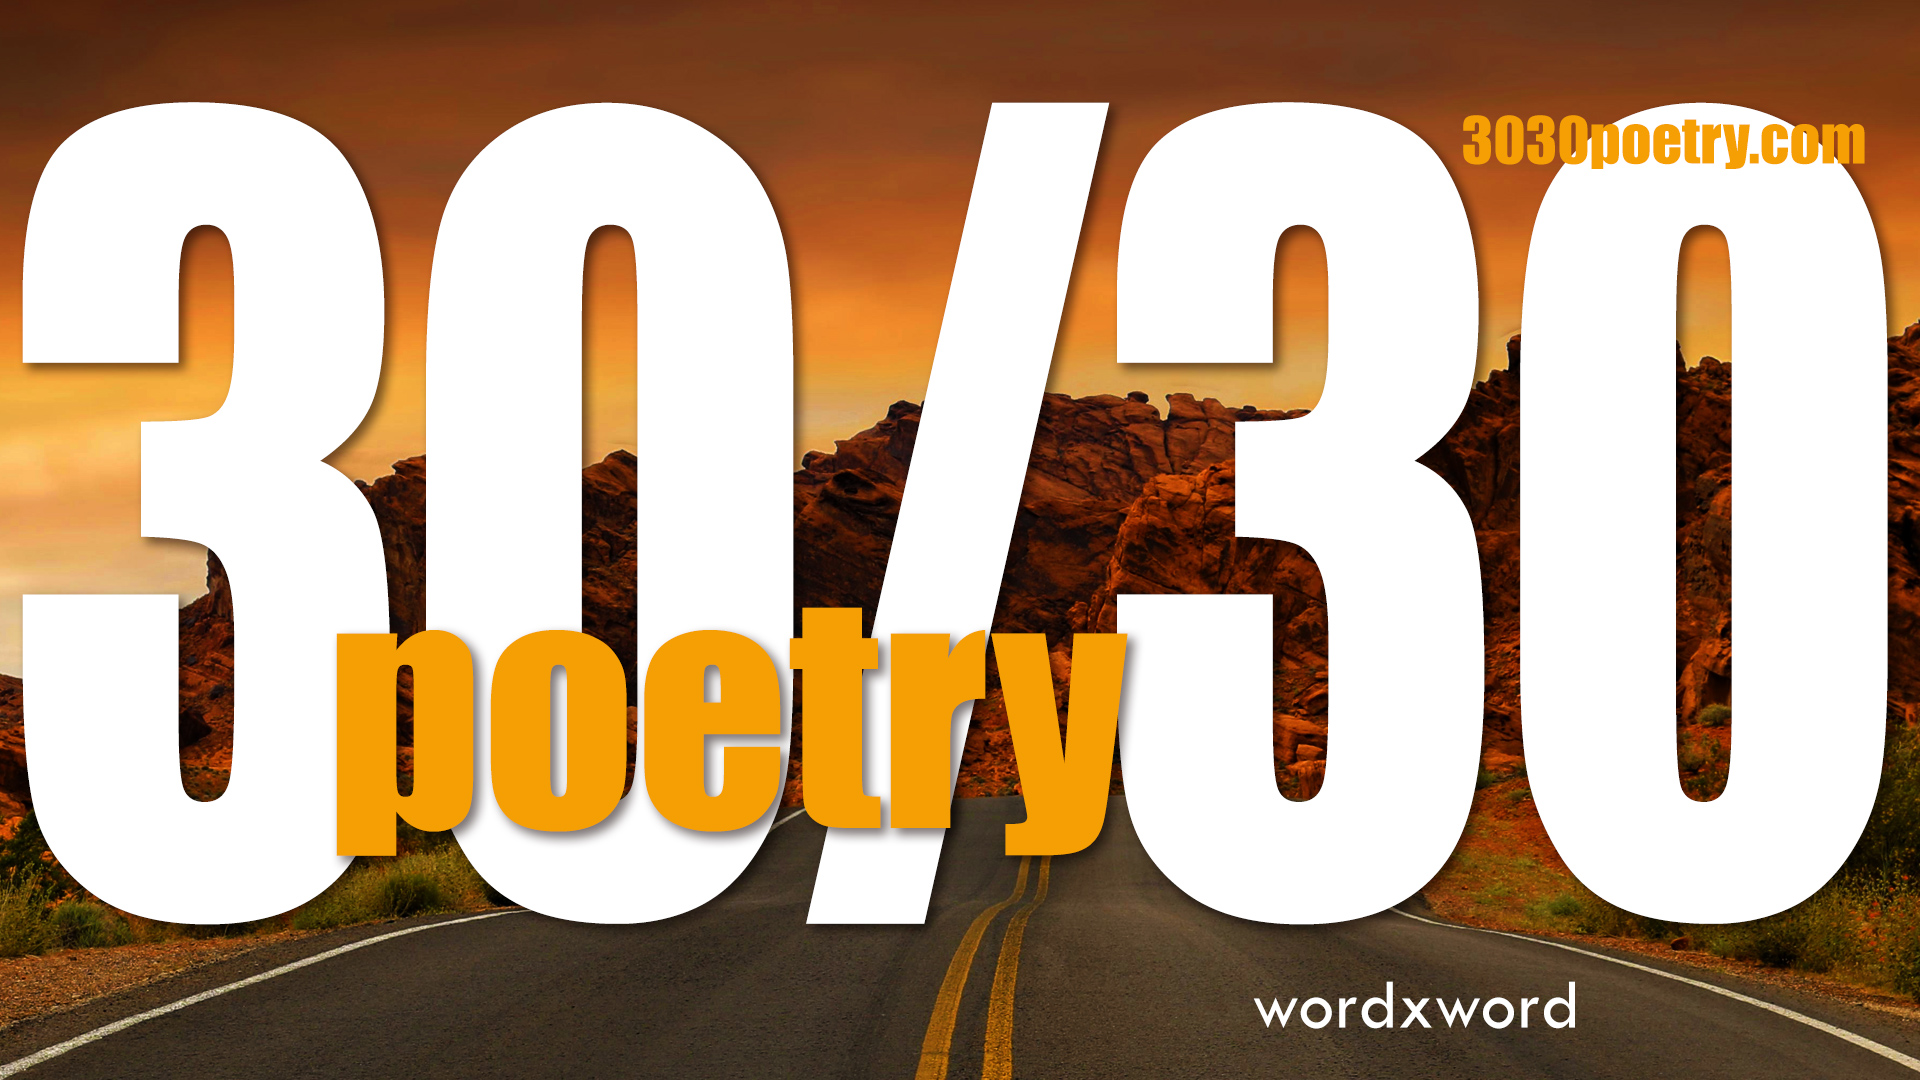 WordXWord's 30/30 Poetry Challenge